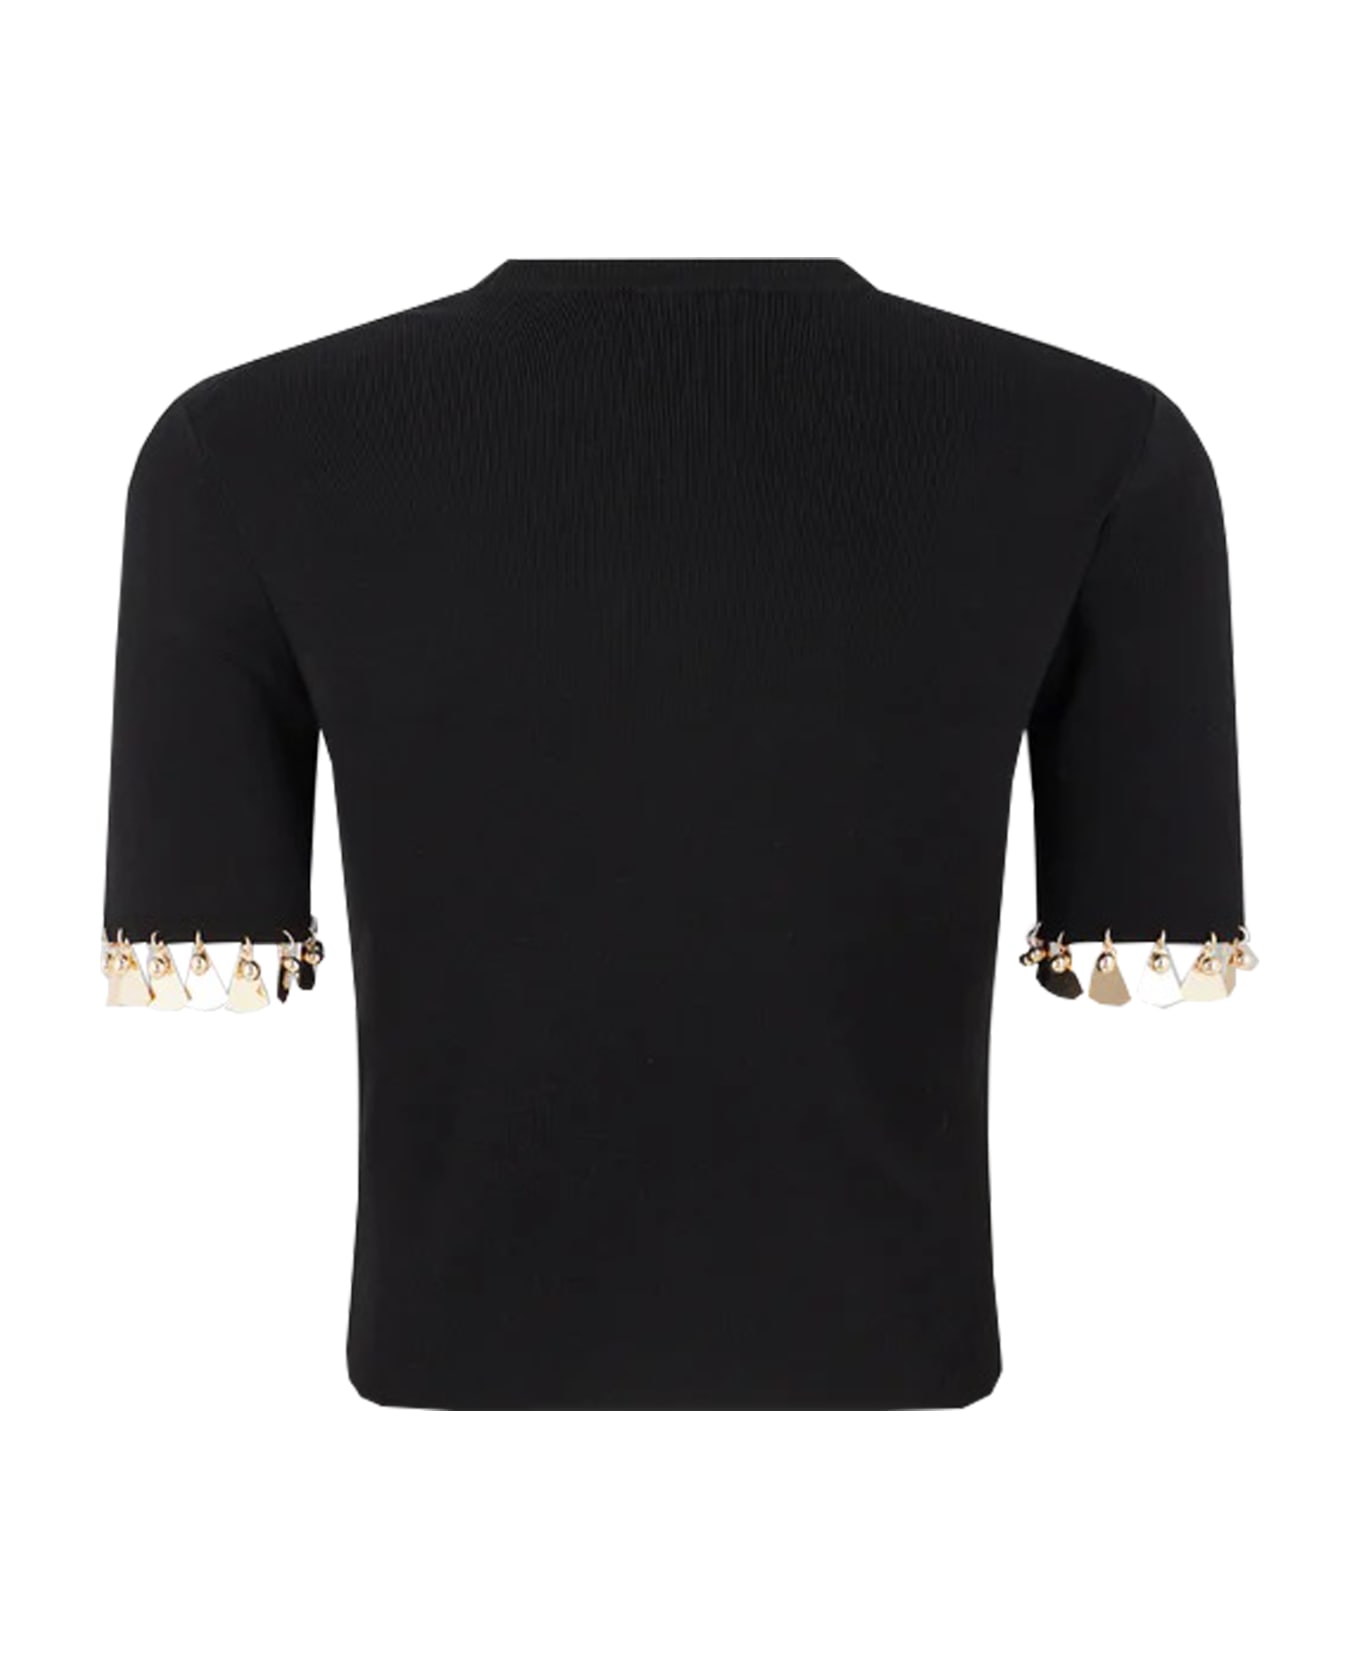 Paco Rabanne Embellished Knit Cropped Top - Black